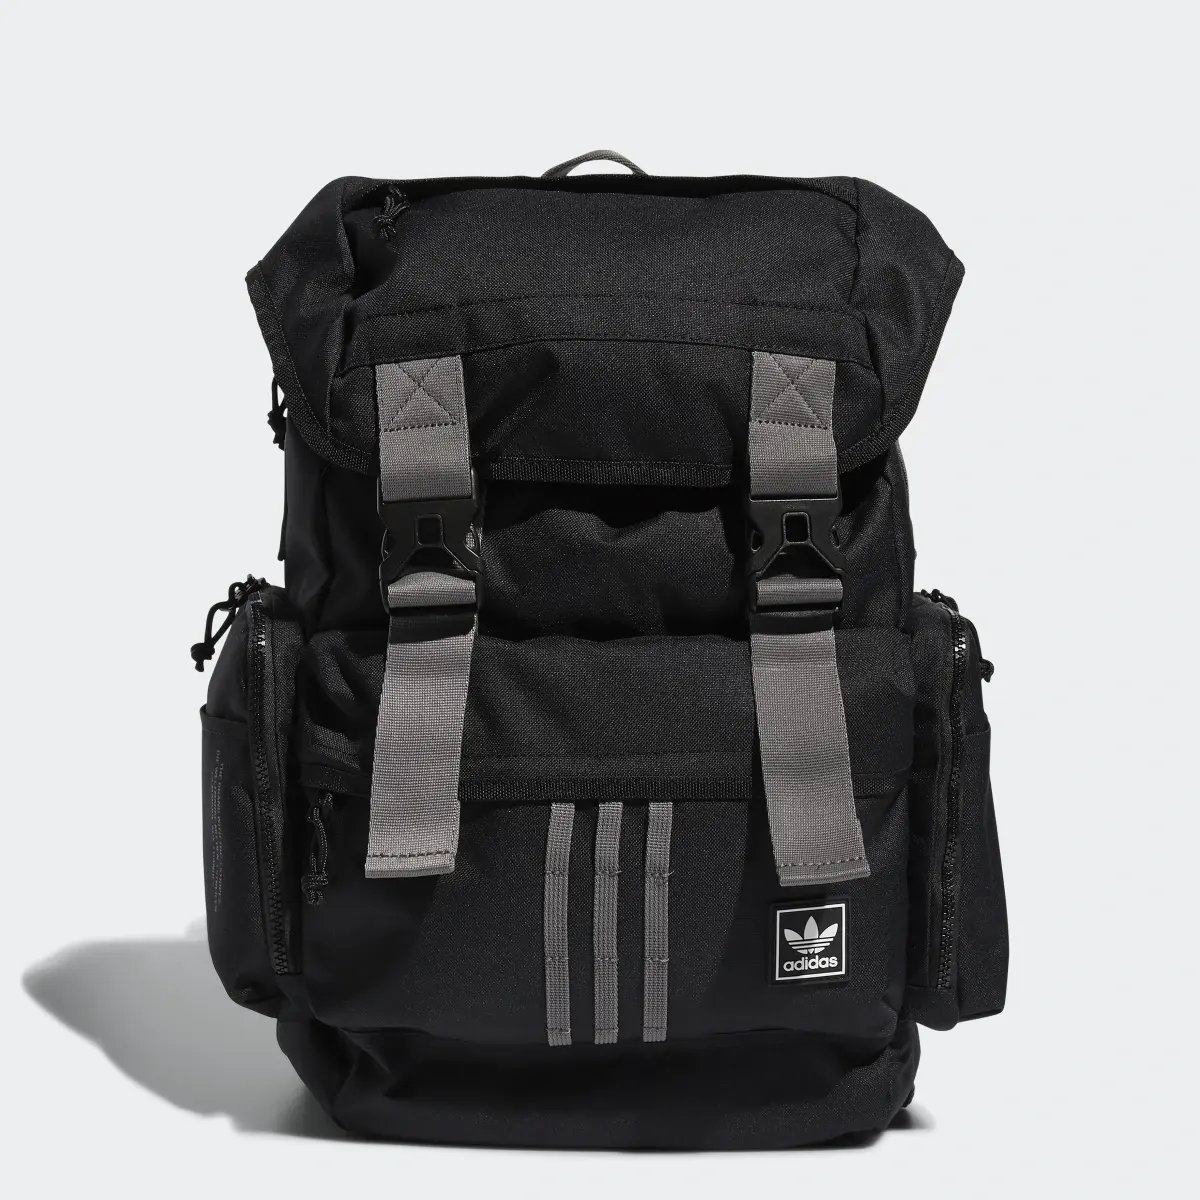 Adidas Utility Backpack 4.0. 1